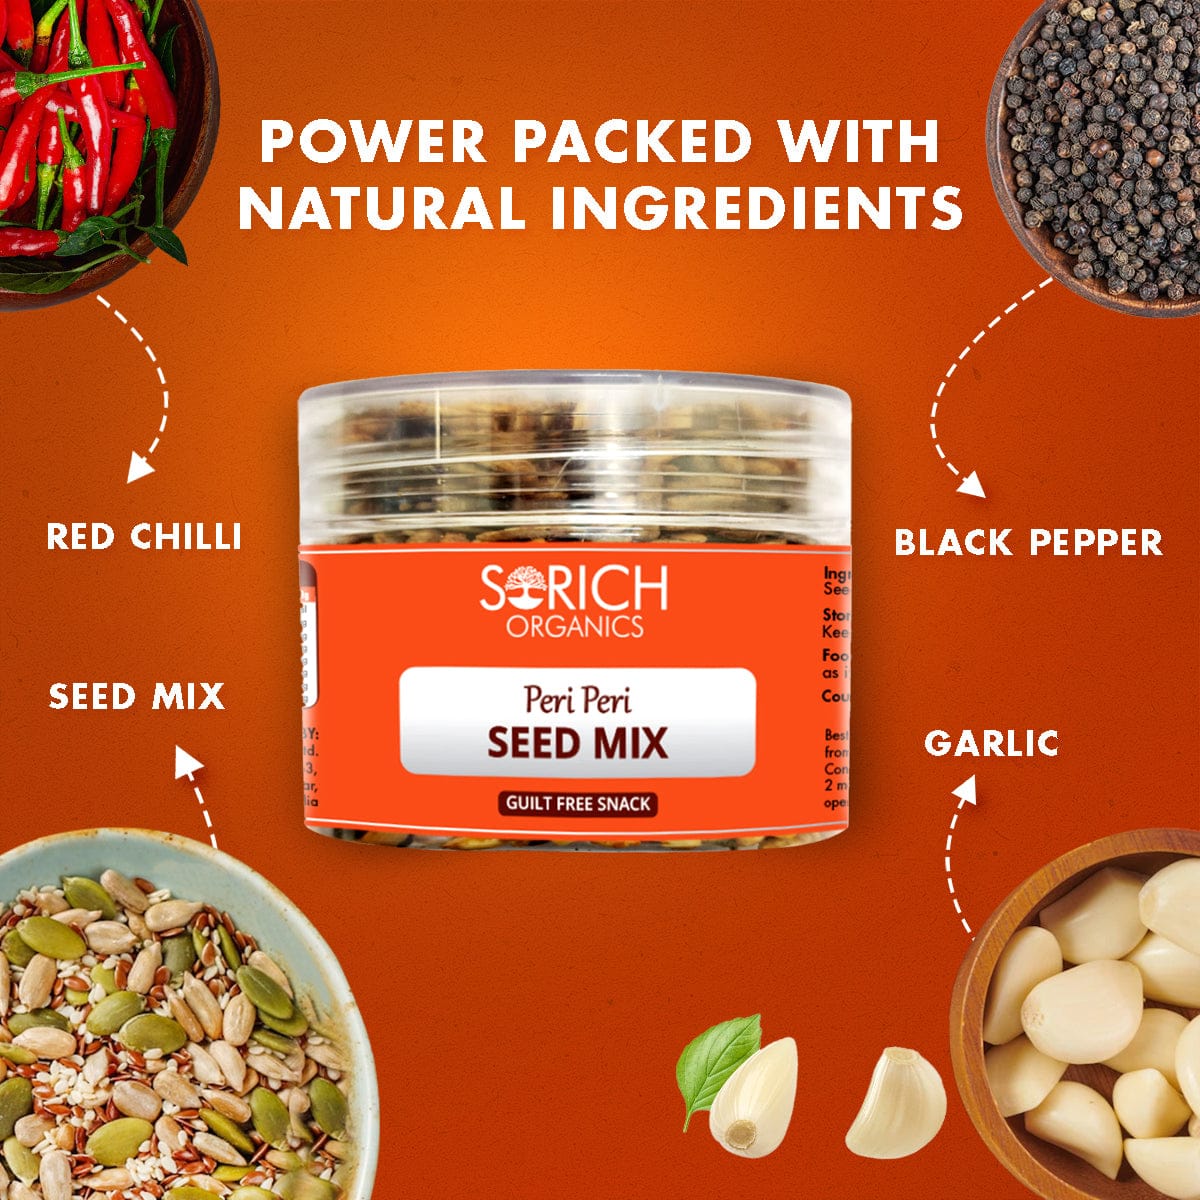 peri peri seed mix ingredients